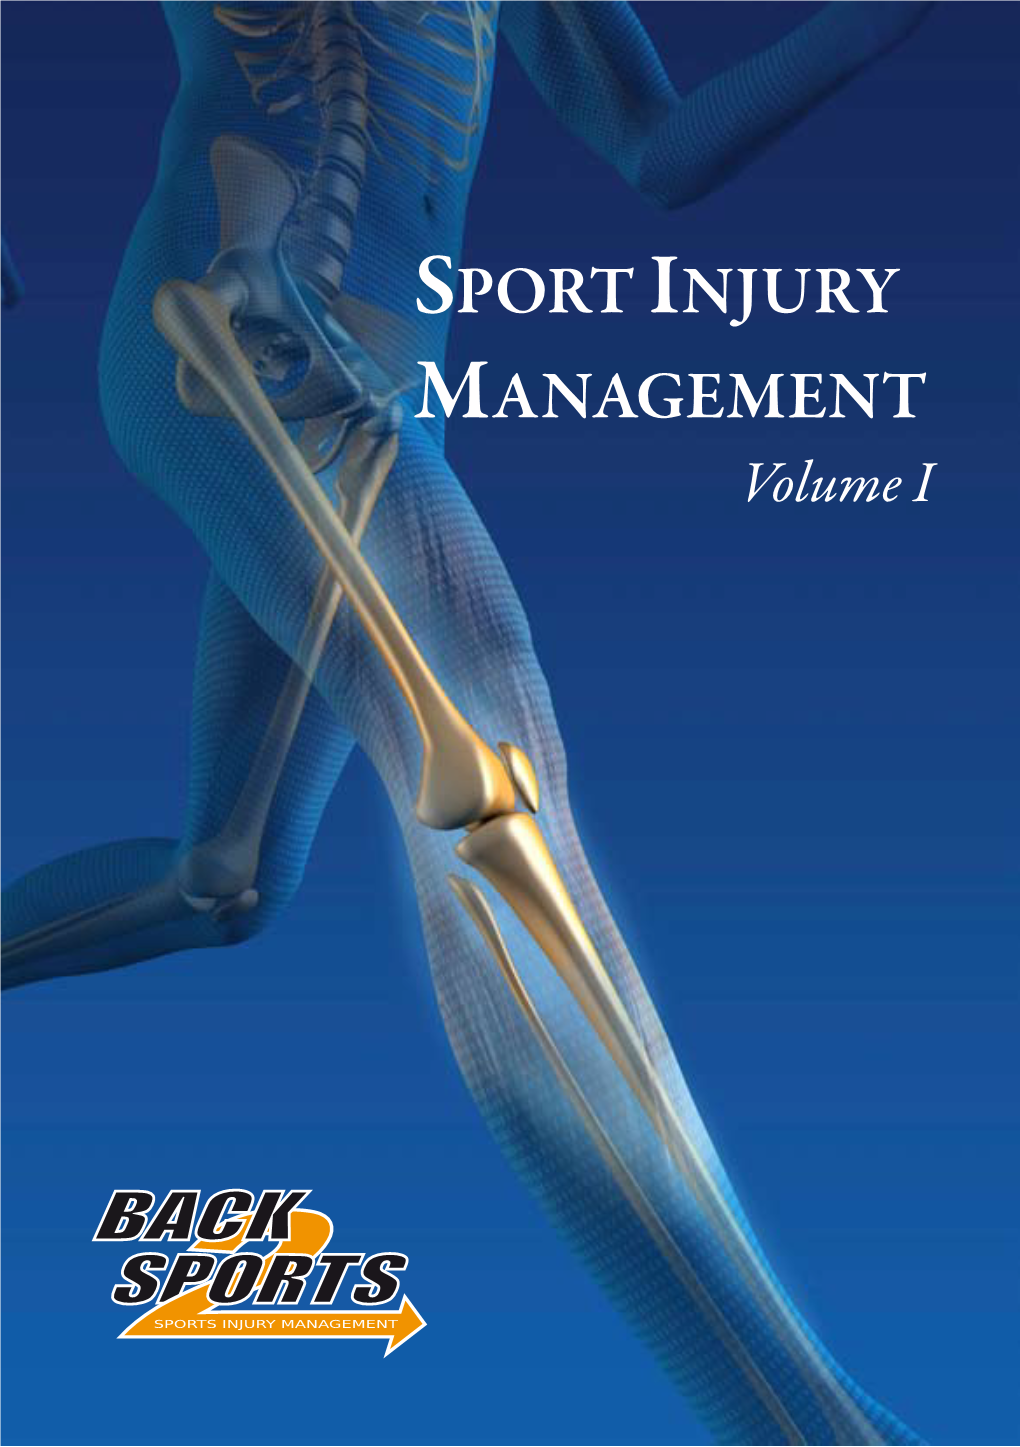 Sports Injury Management: Volume I